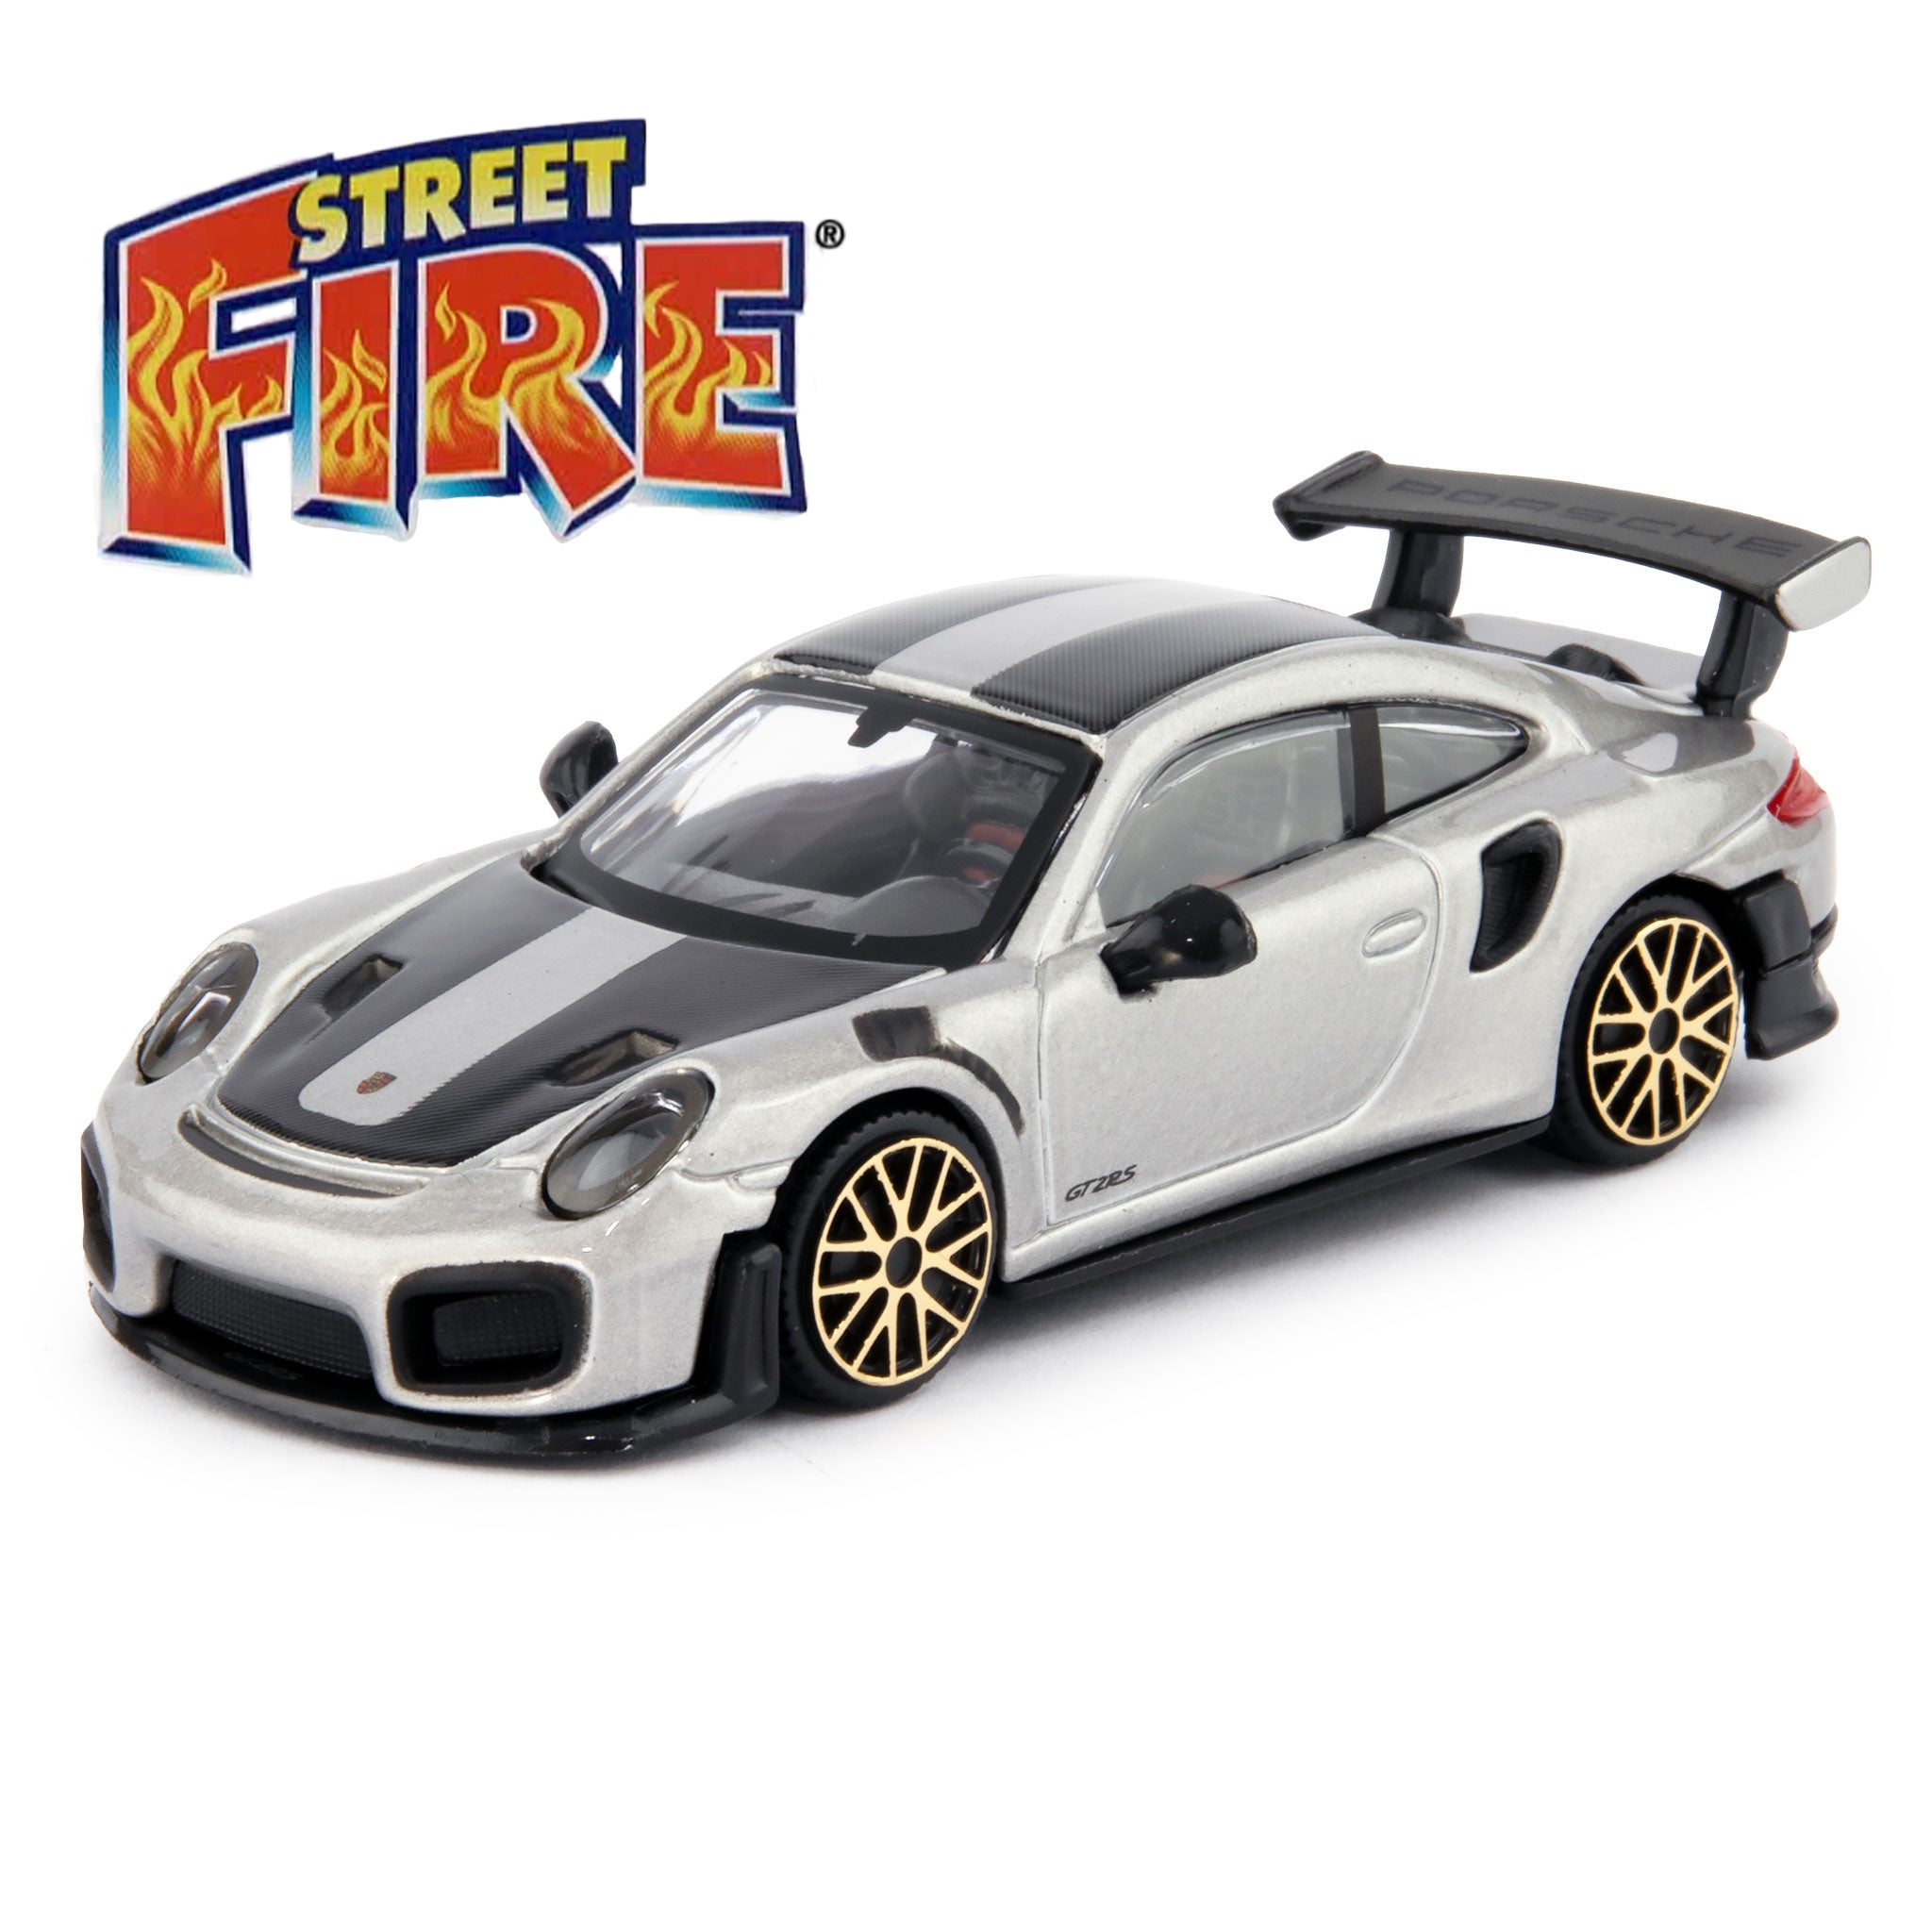 Porsche 911 GT2 RS silver - 1:43 Scale Diecast Toy Car